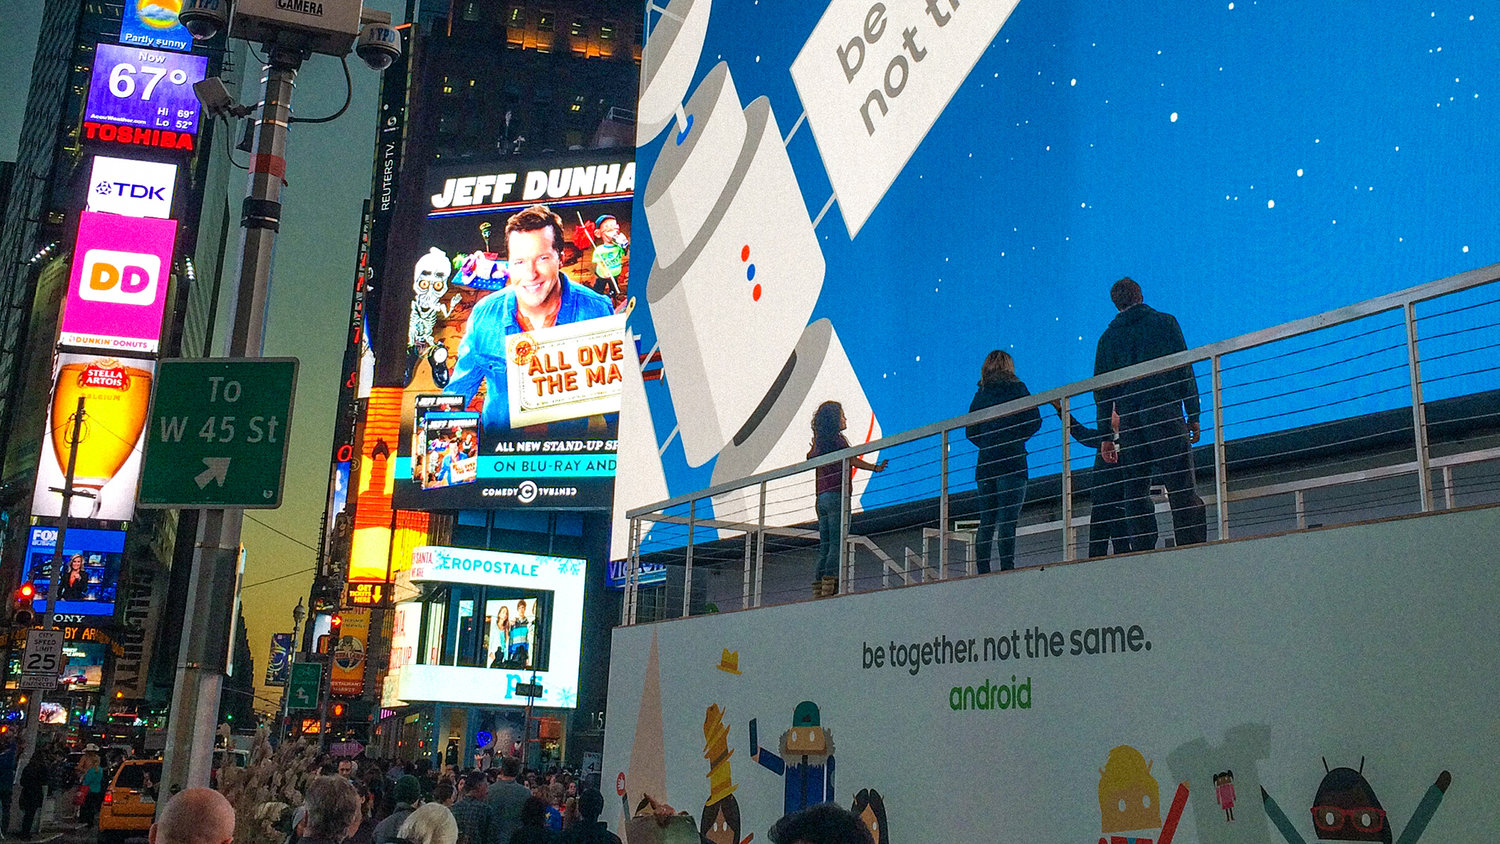 Google Androidify Times Square Scott Balles